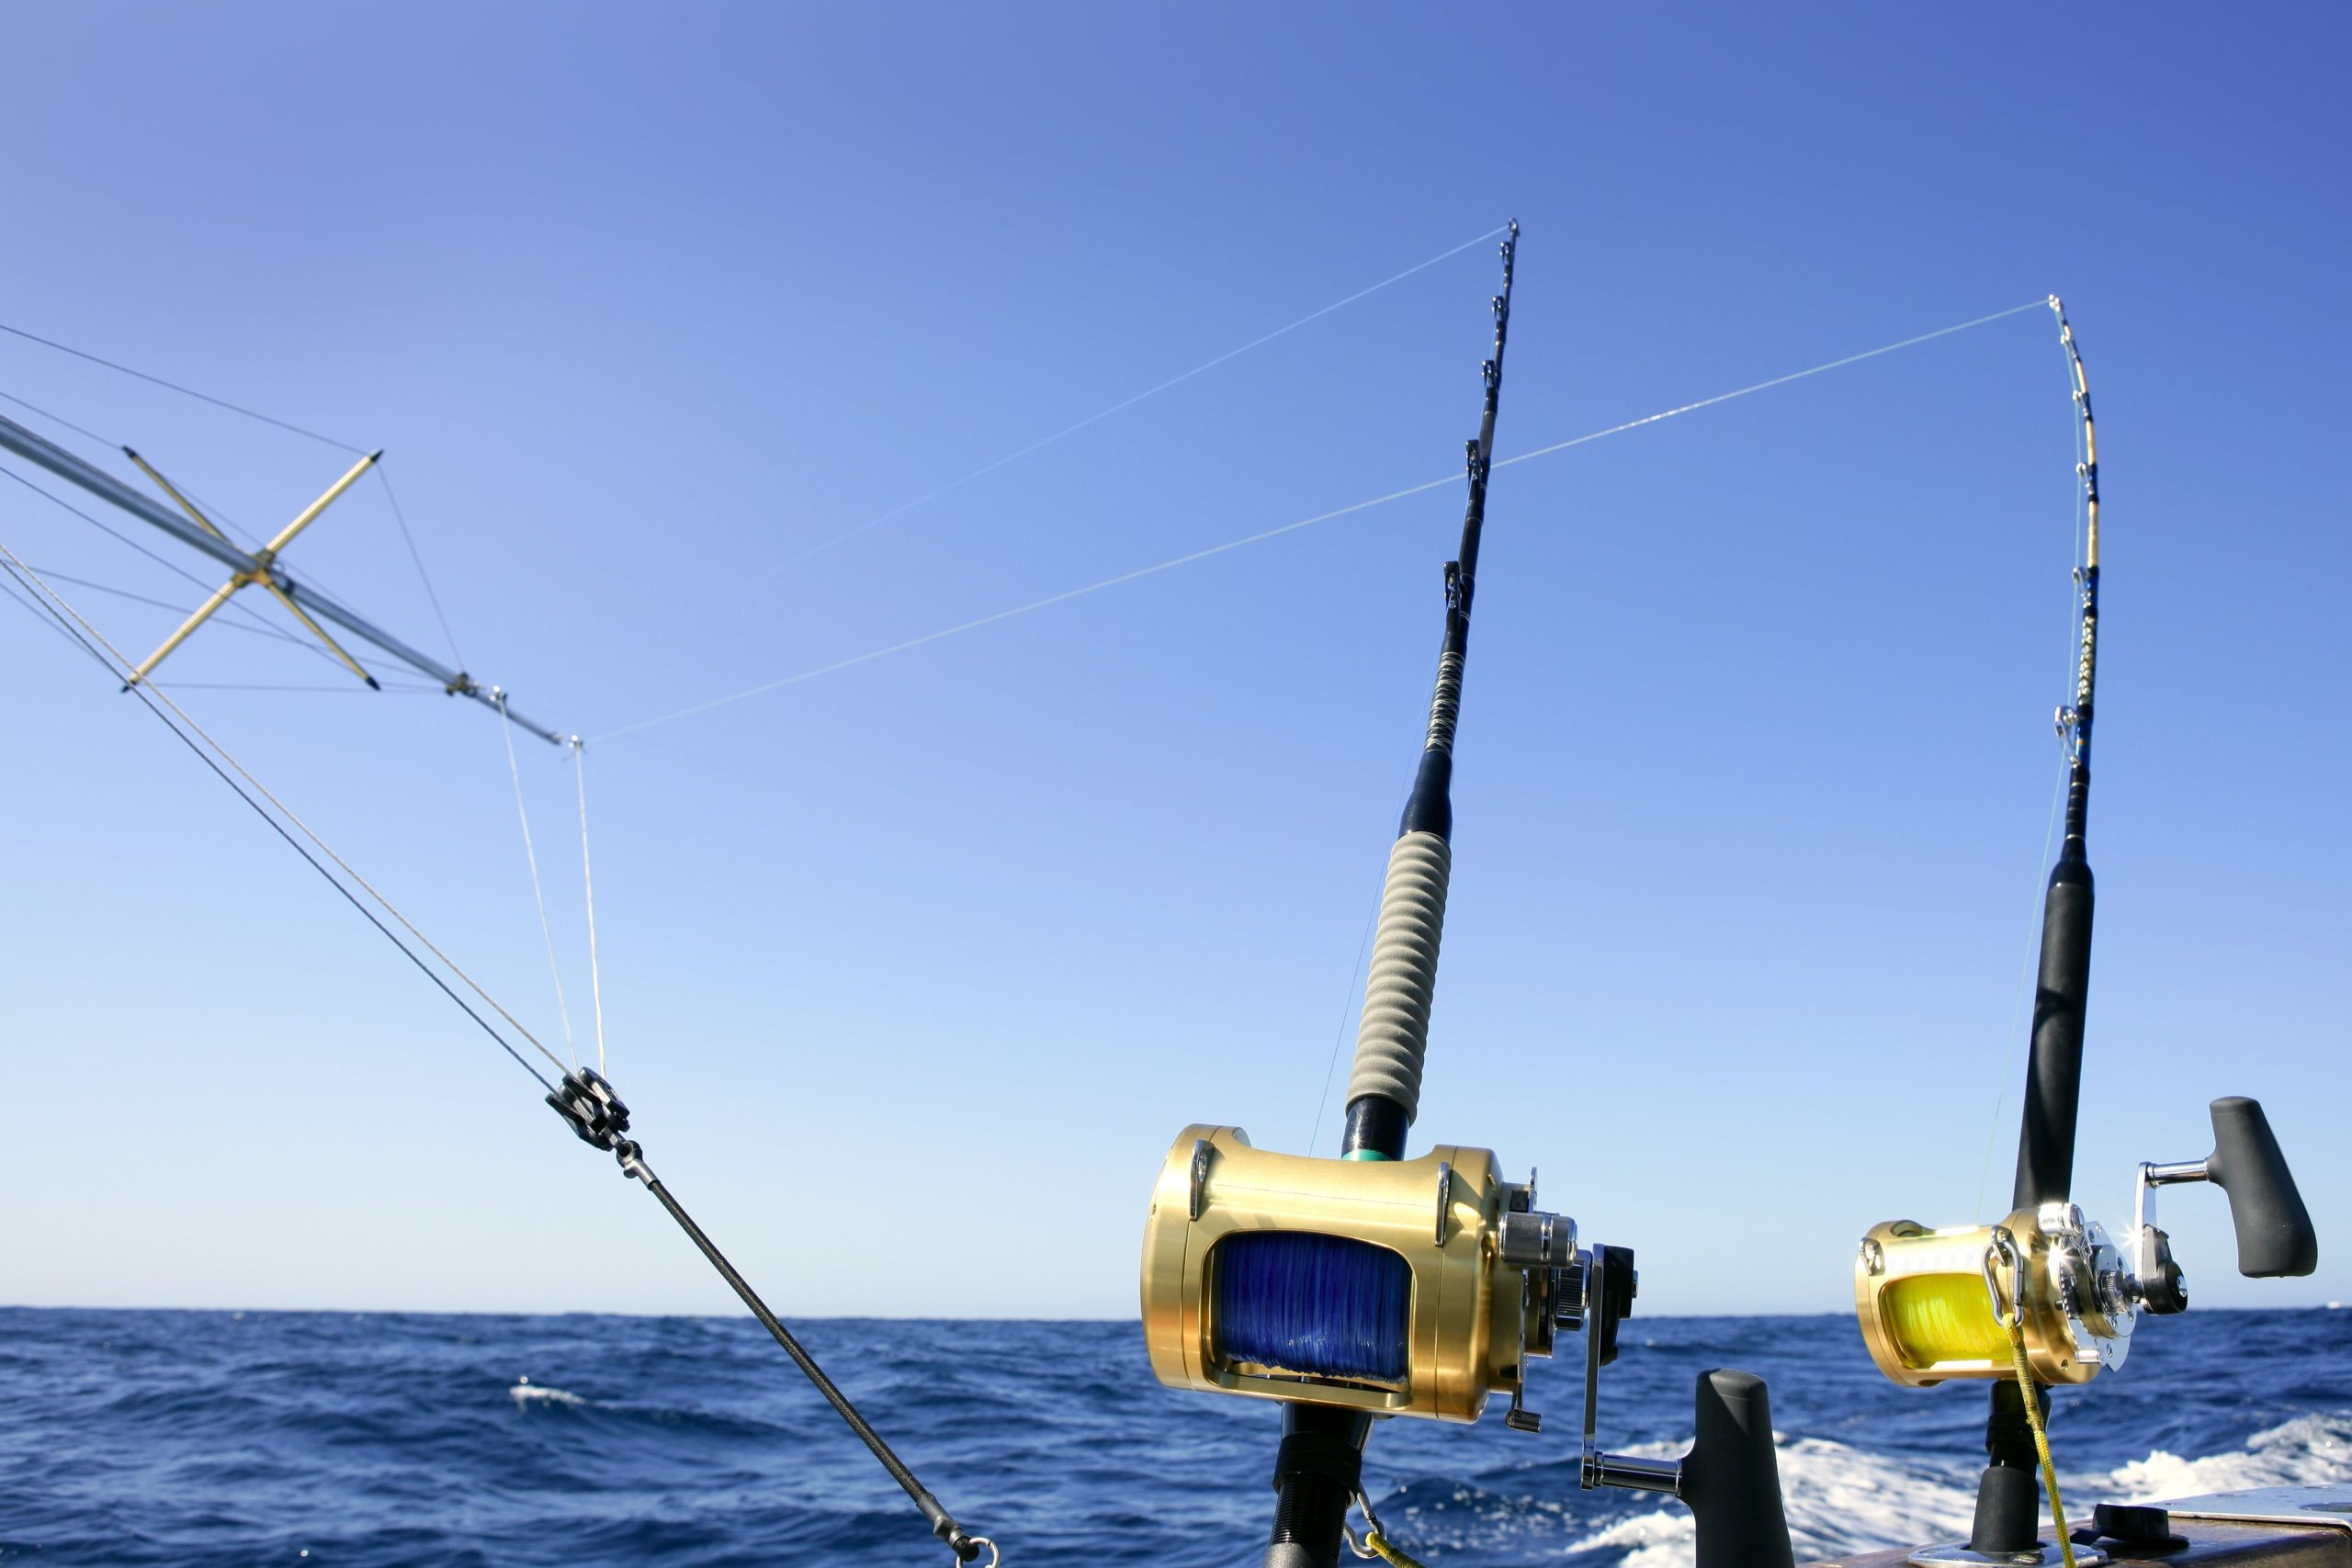 Tackle+Marine sports fishing accessories